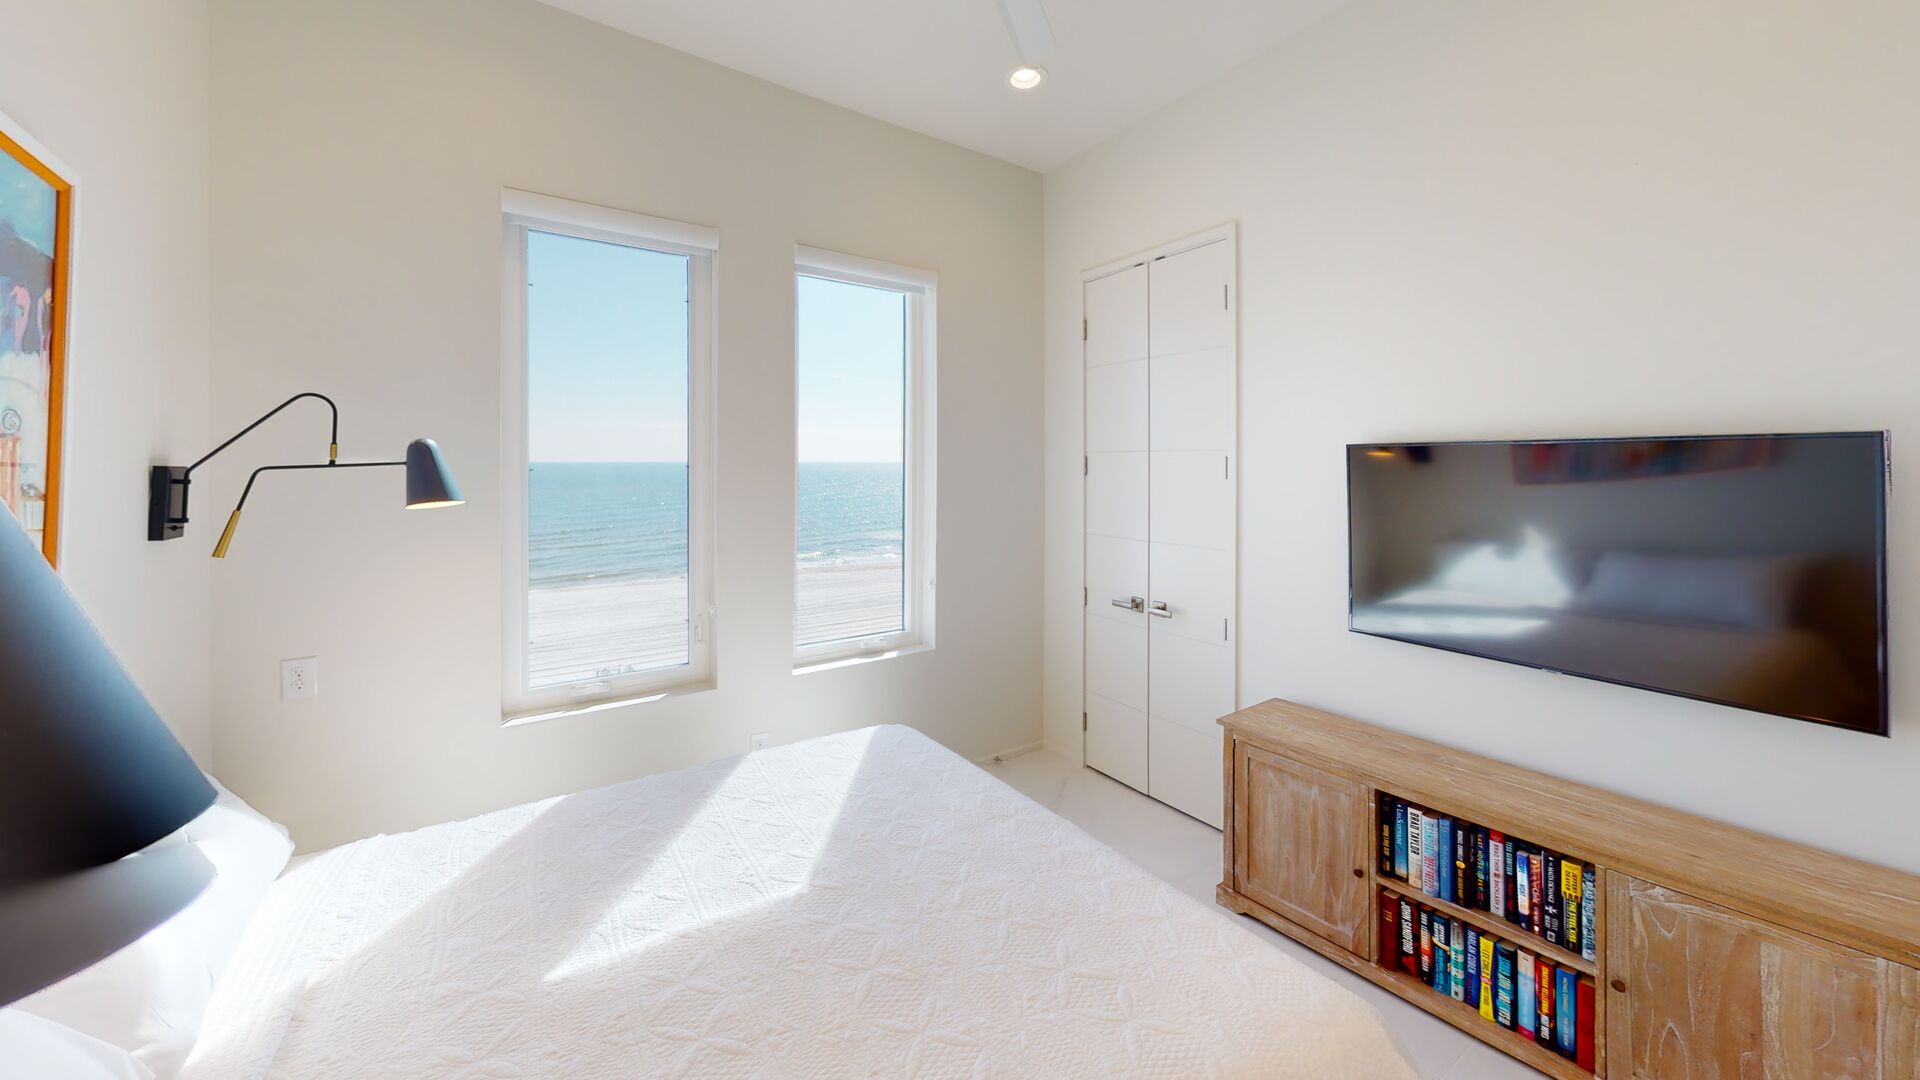 Bedroom 5 has a TV, Gulf views, stocked bookshelf, and a private bathroom